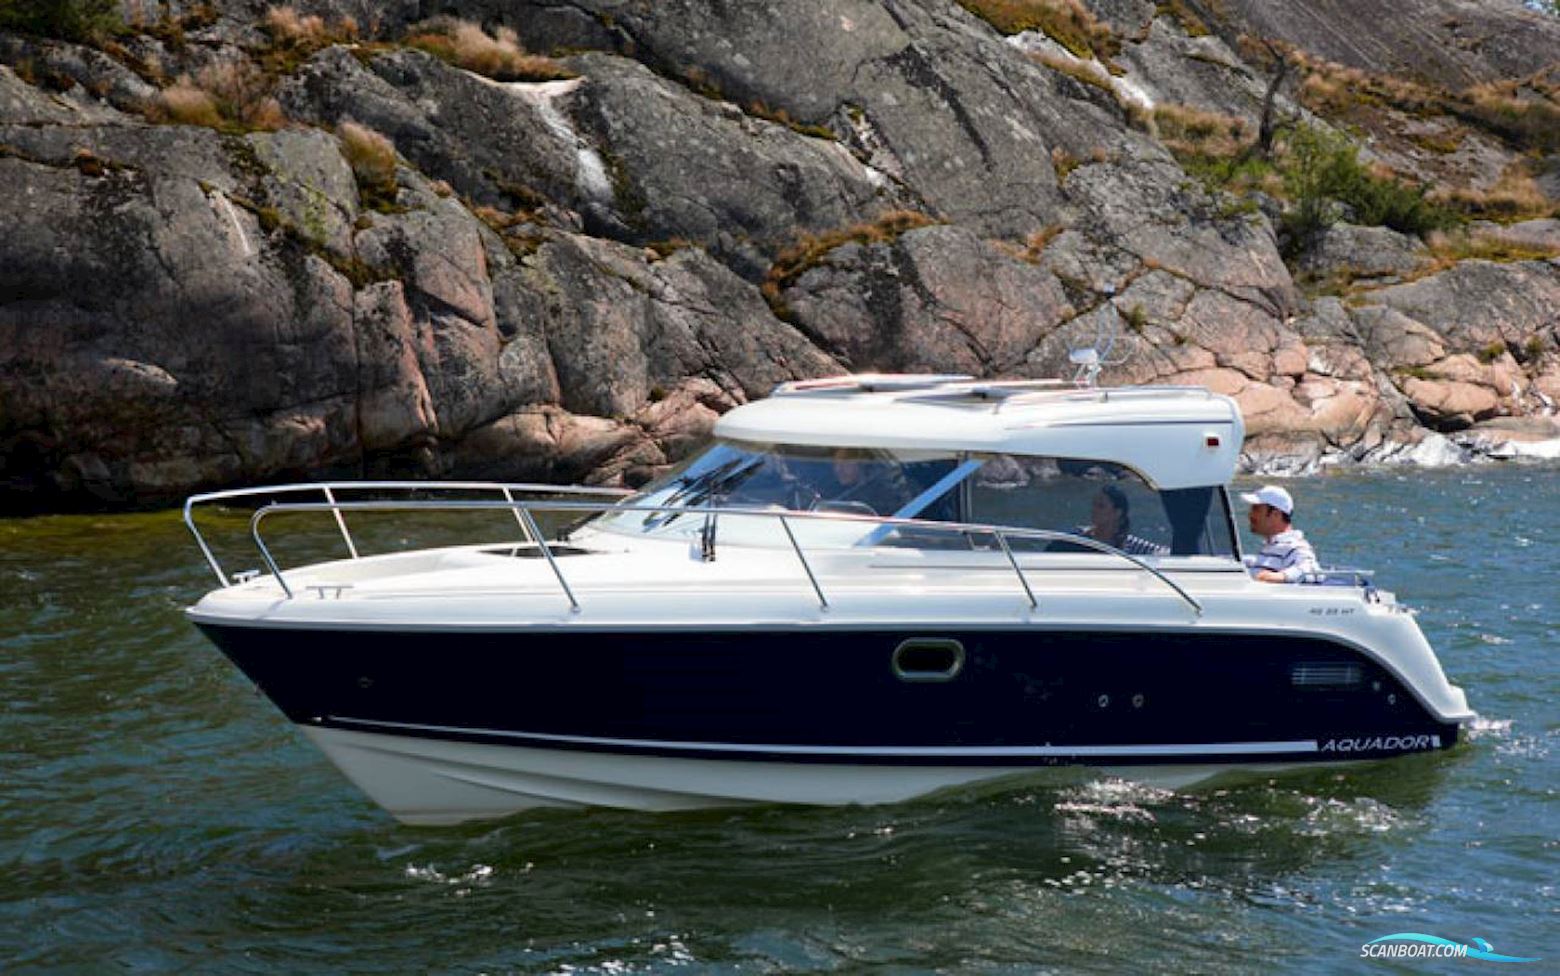 Aquador 23 HT - Kad32 170 HK Motor boat 2004, with Kad32 engine, Denmark